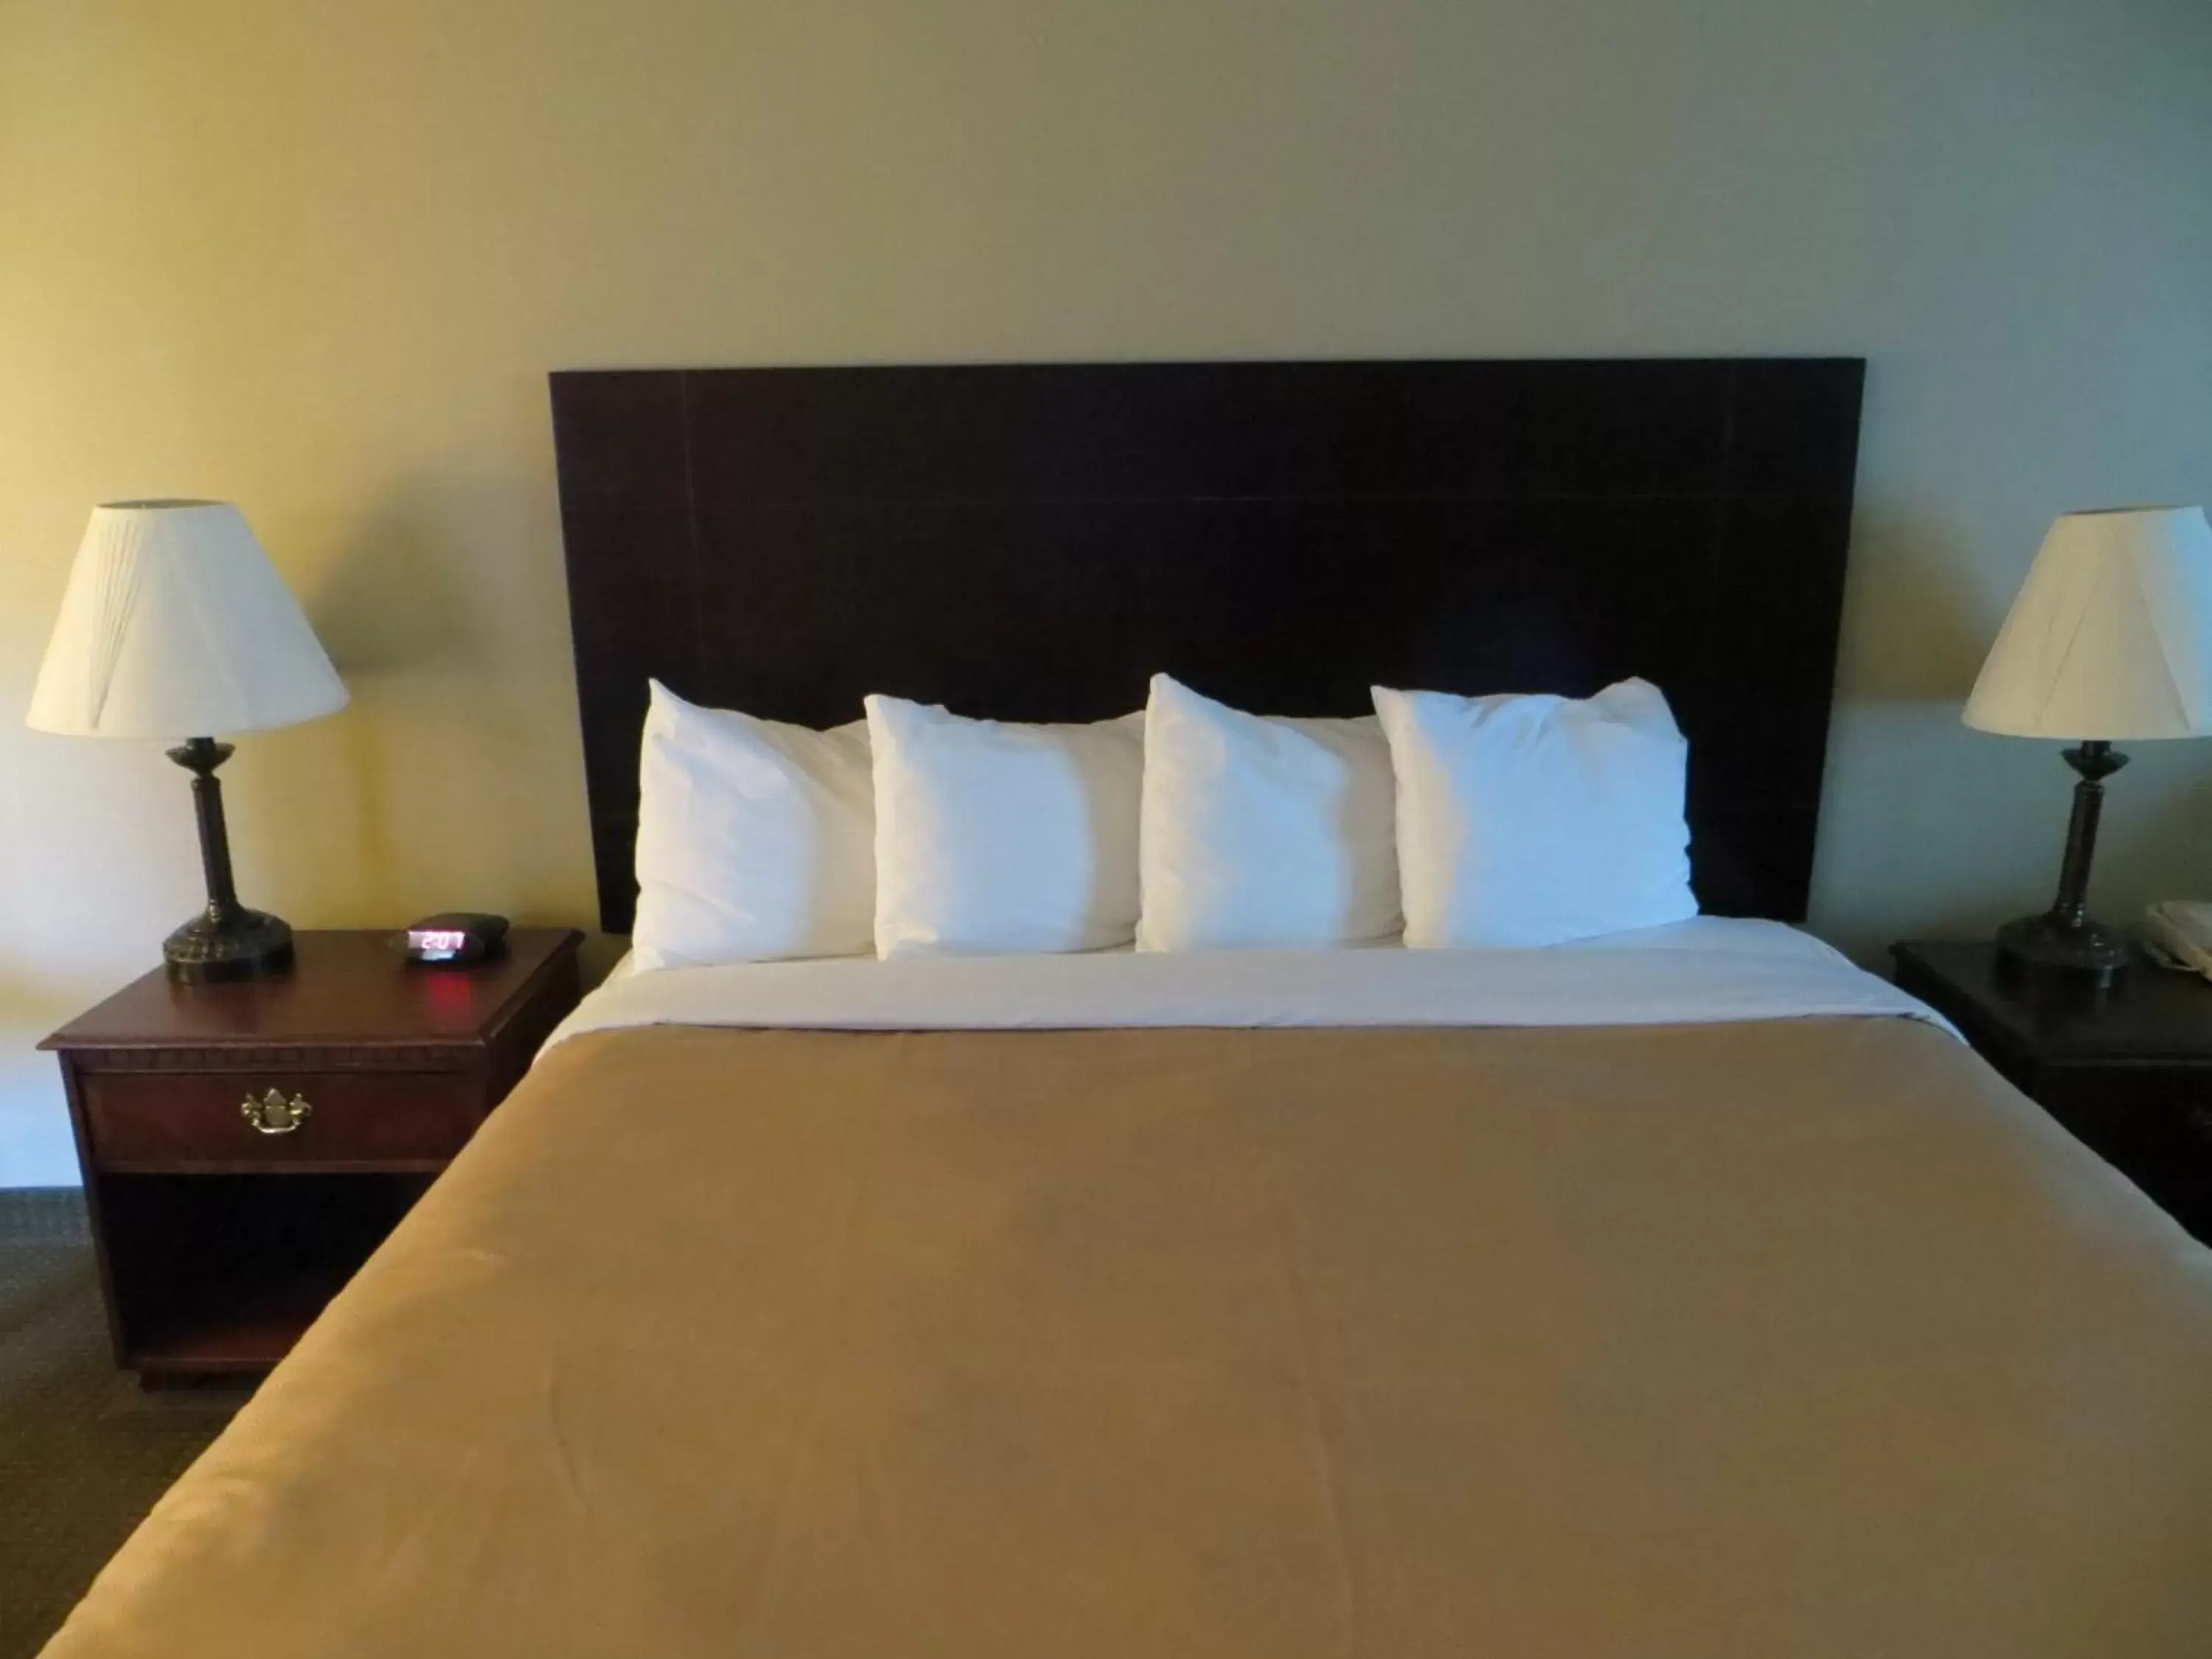 Bed in Quality Inn Winder, GA